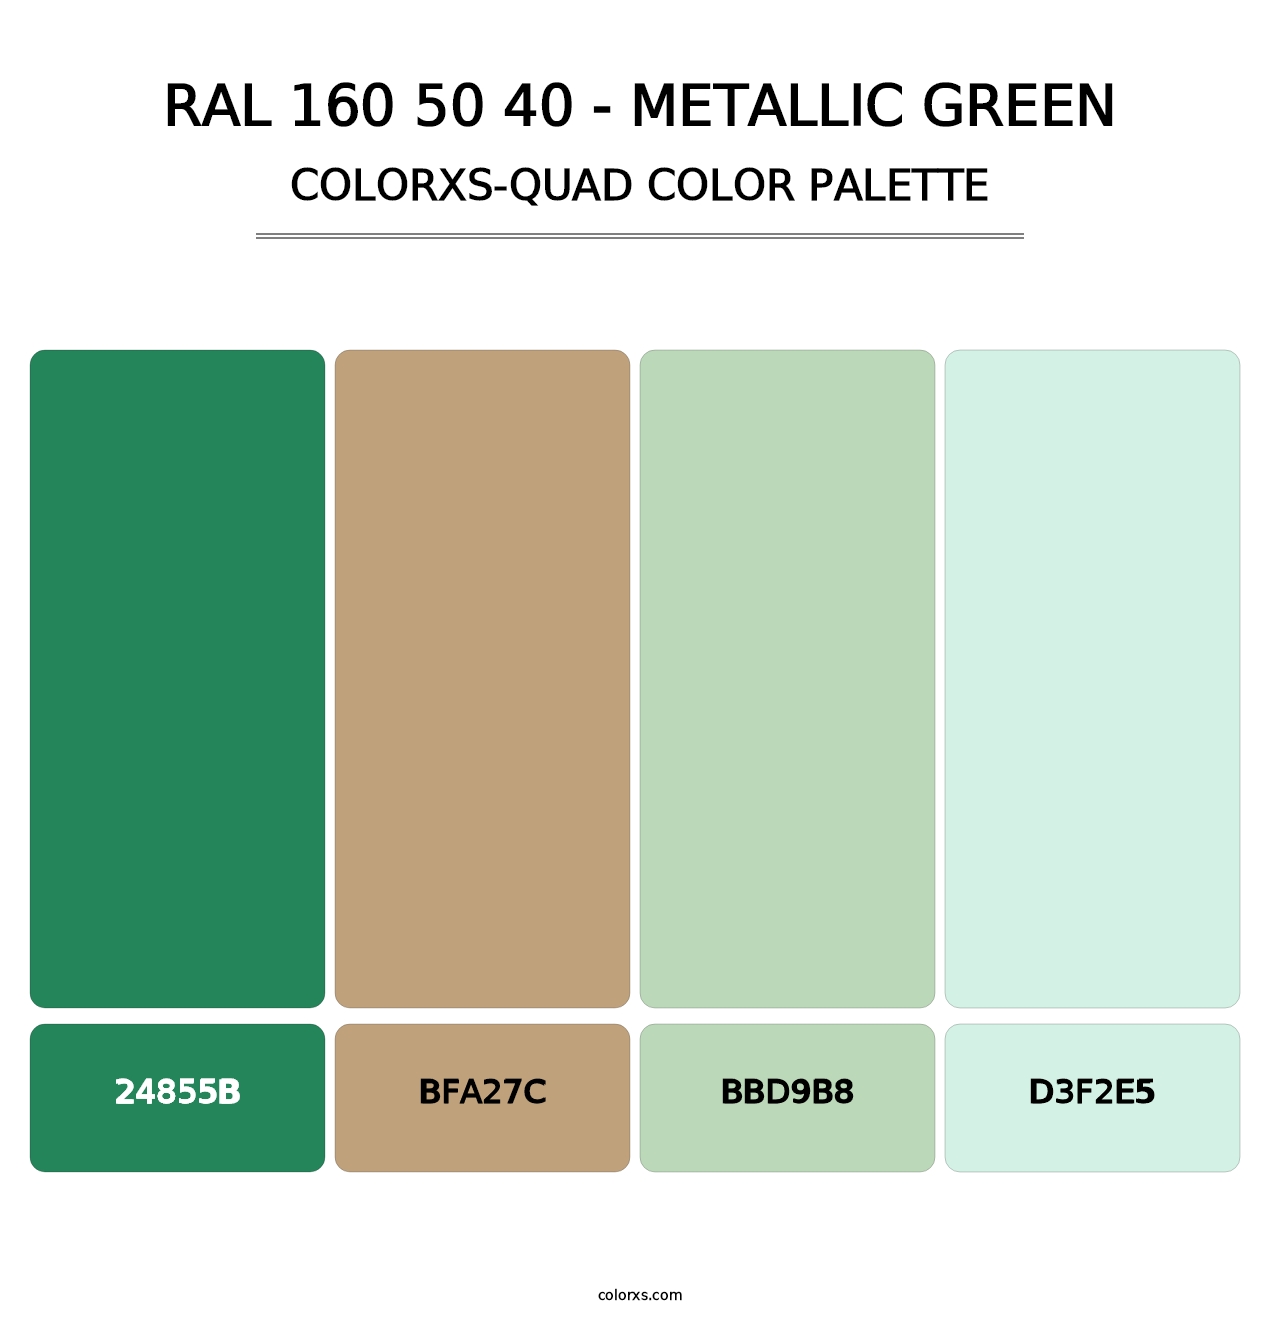 RAL 160 50 40 - Metallic Green - Colorxs Quad Palette